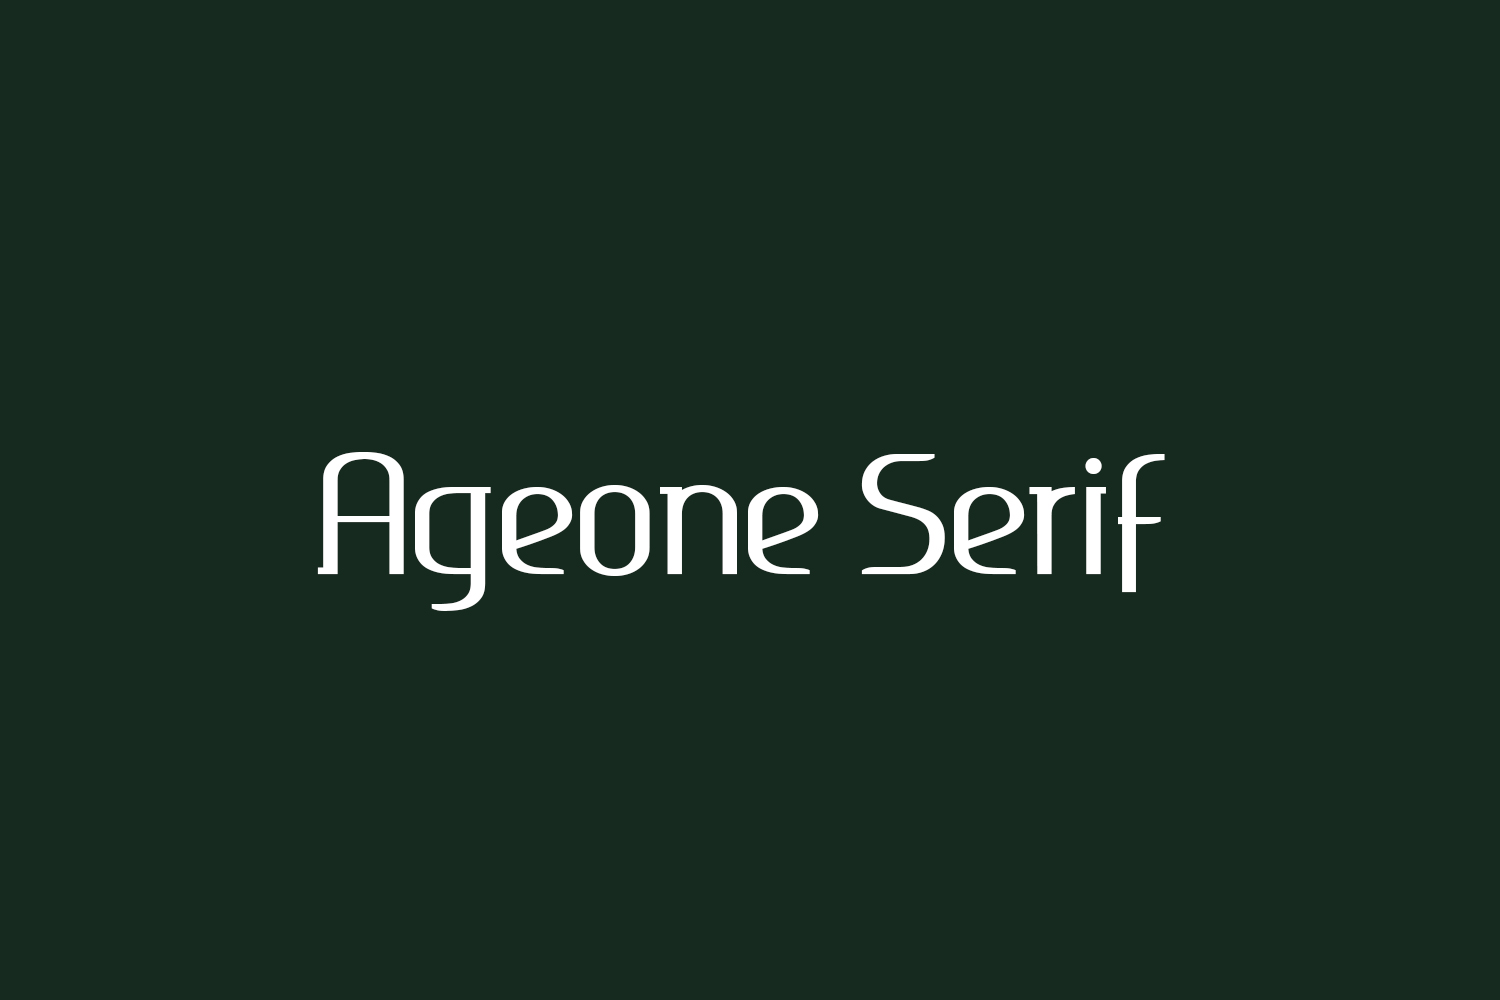 Ageone Serif Free Font